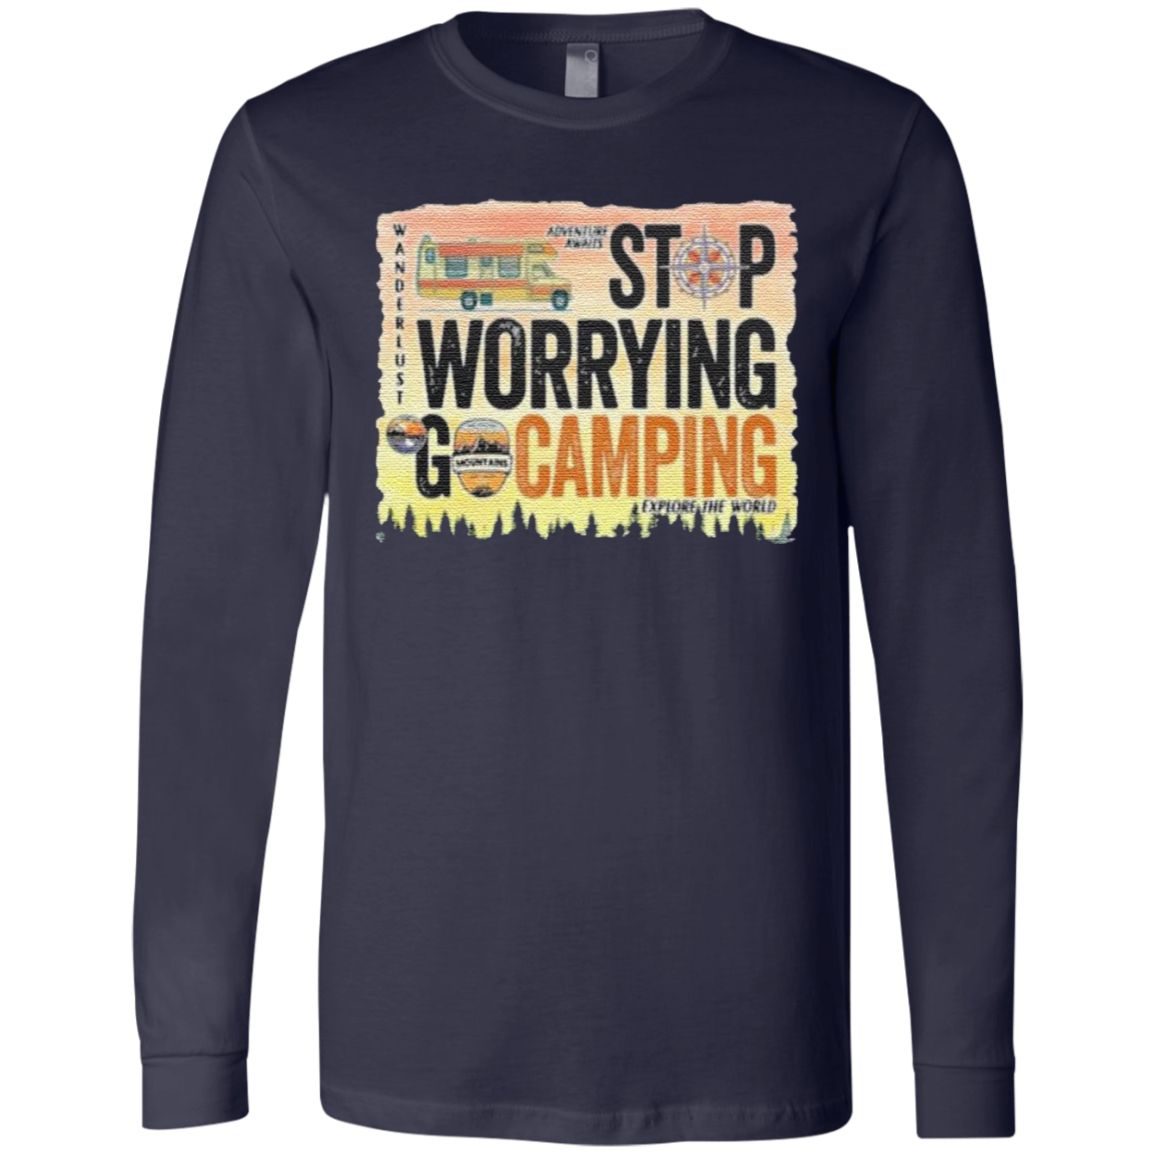 Stop Warrying Go Camping t shirt